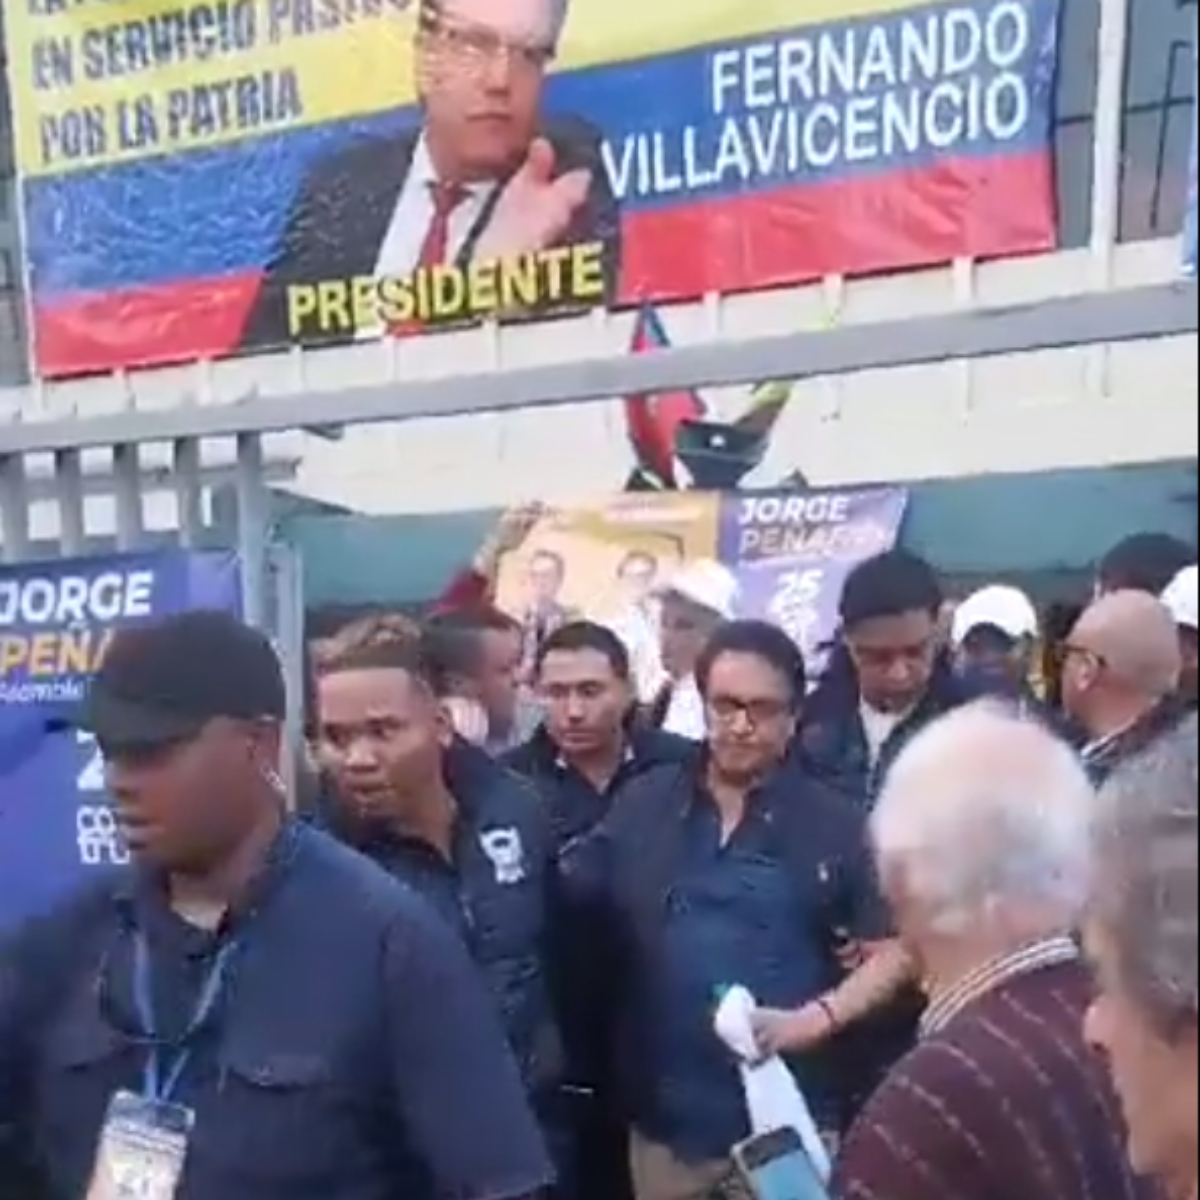  fernando villavicencio assassinado - candidato presidente equador 